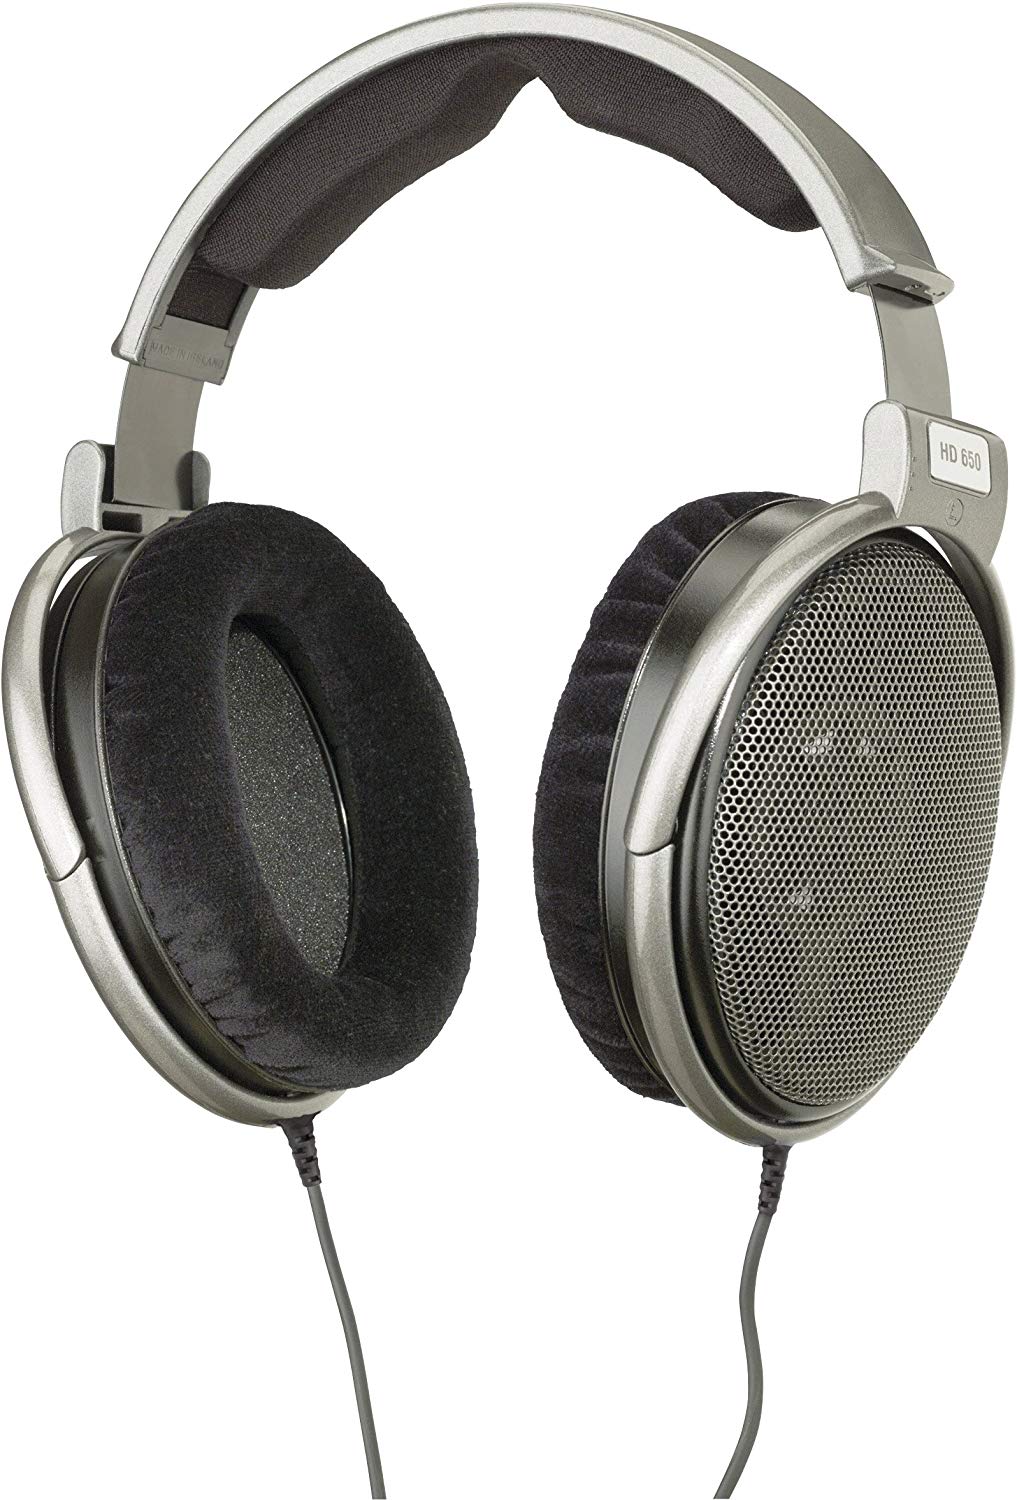 Sennheiser HD 6XX HD 650 Limited Edition Massdrop Headphones, NOB